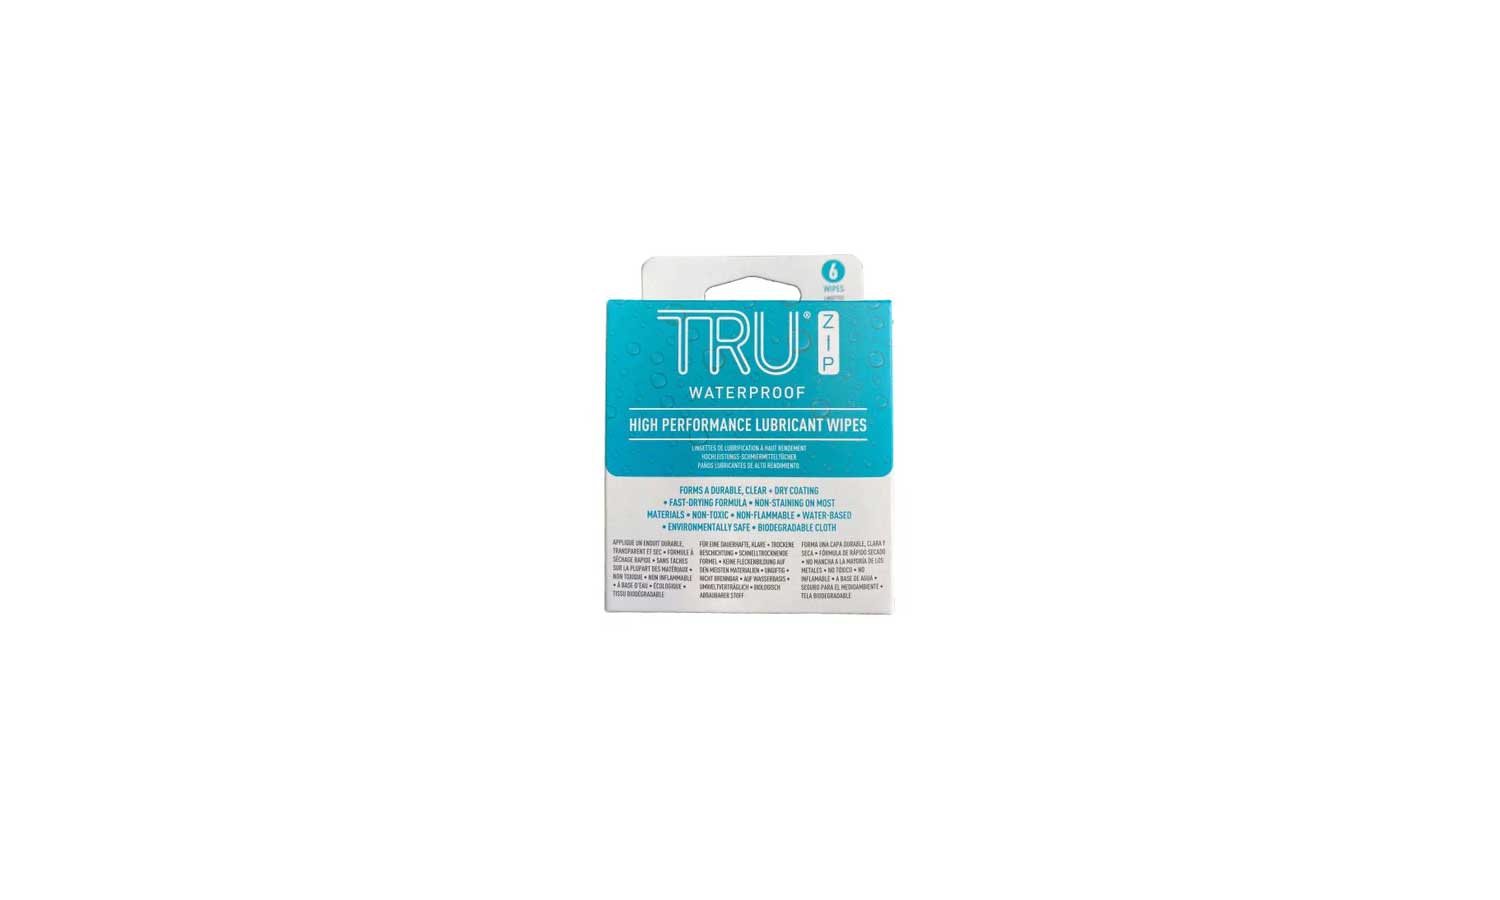 TRU® Zip High Performance Lubricant Wipes – TRUZip